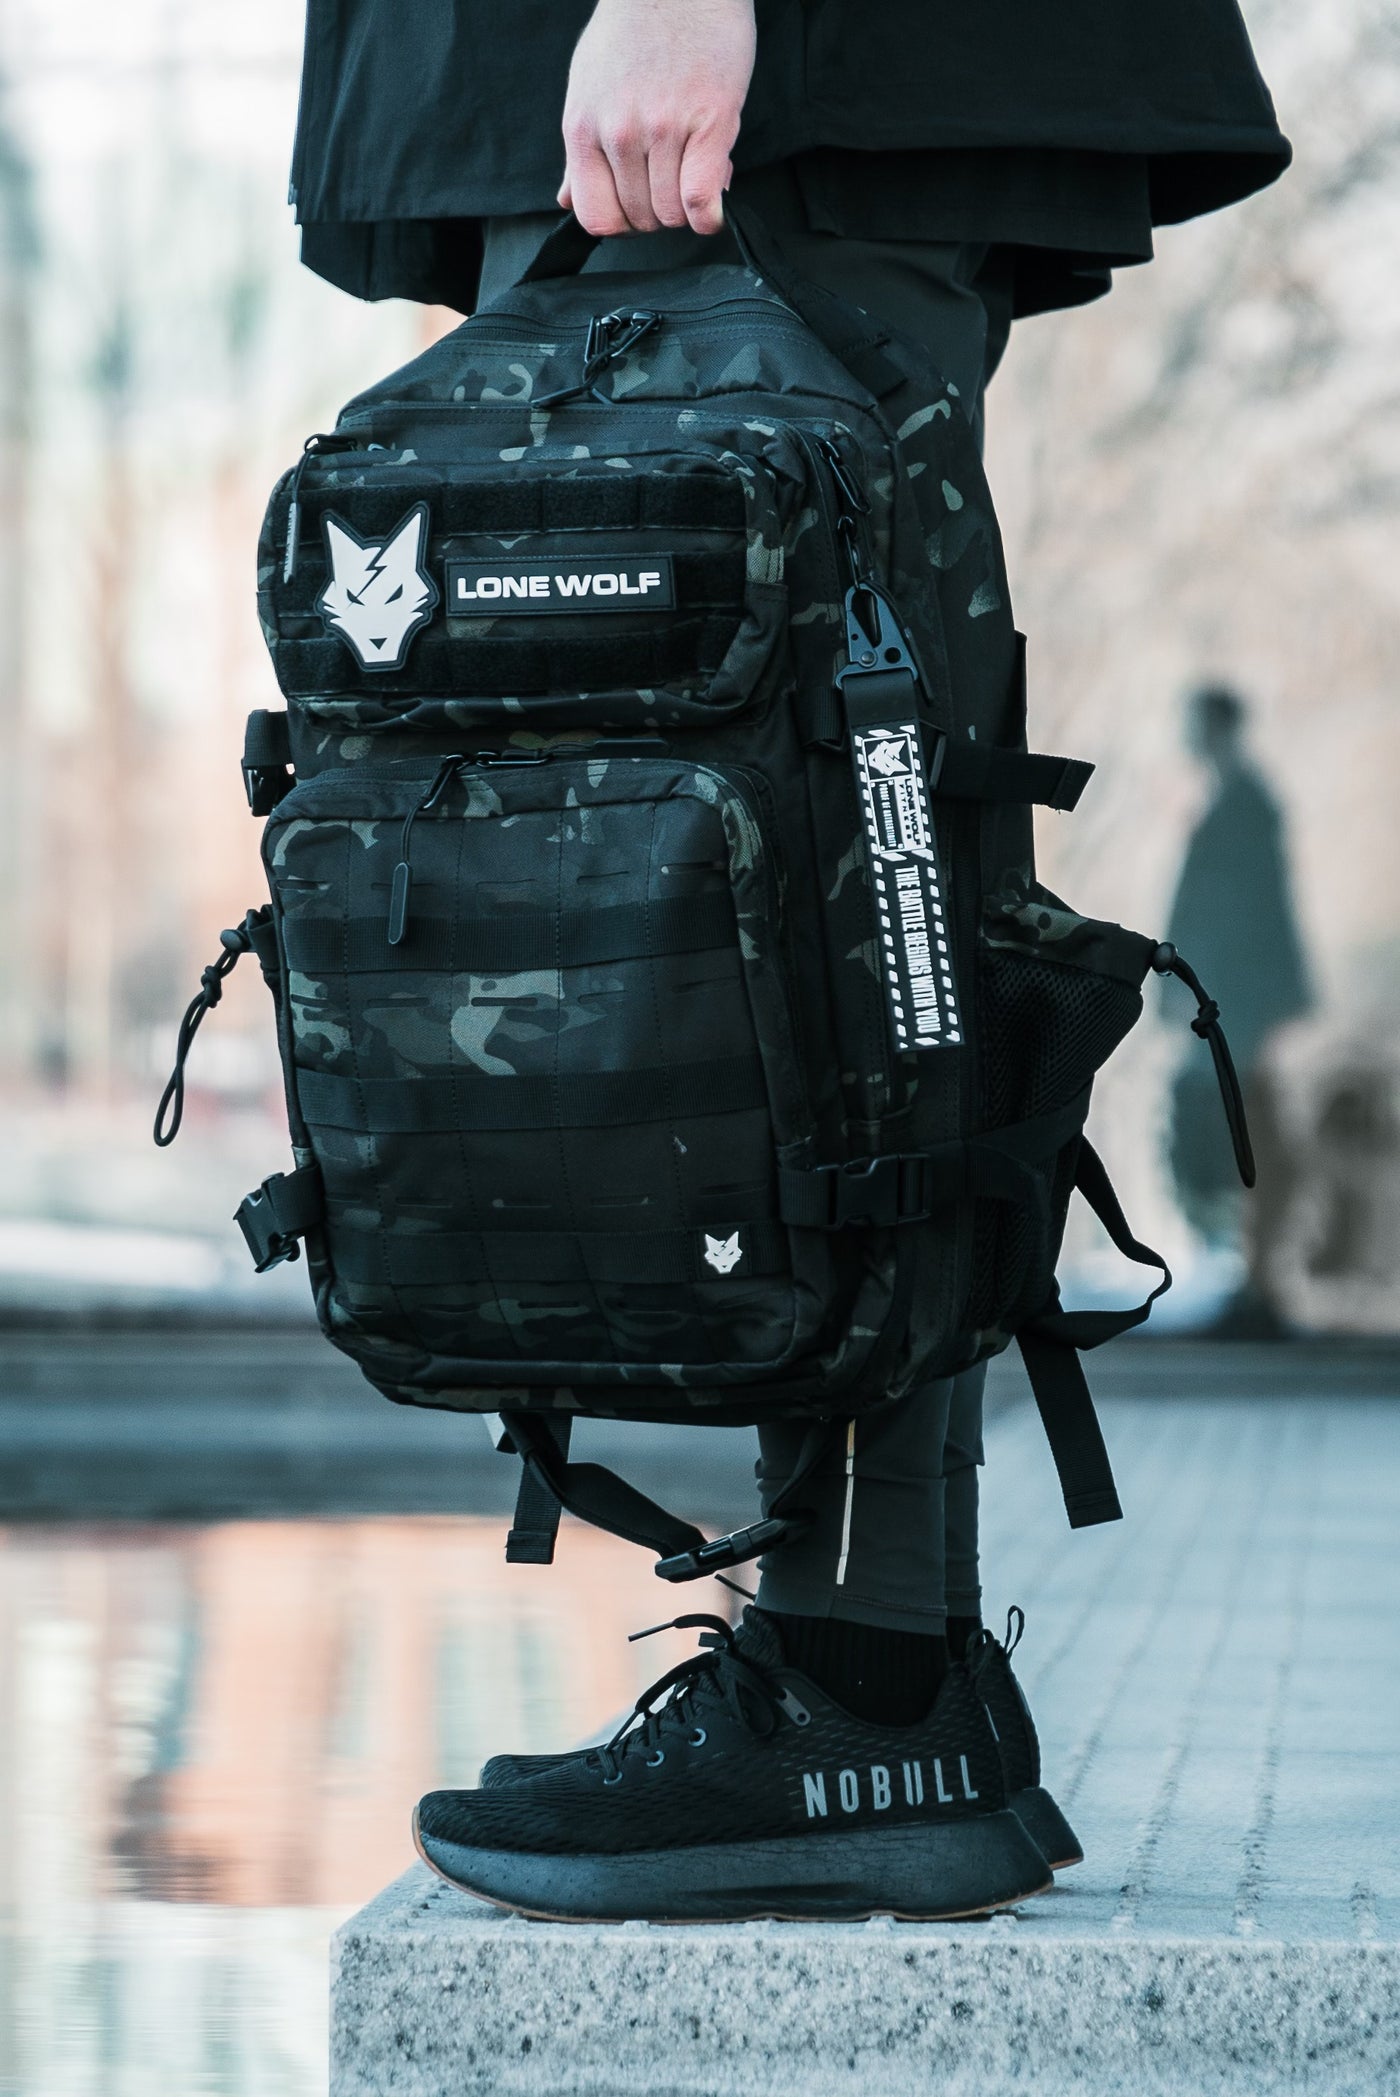 Gen 3 Black Camo 45L Backpack